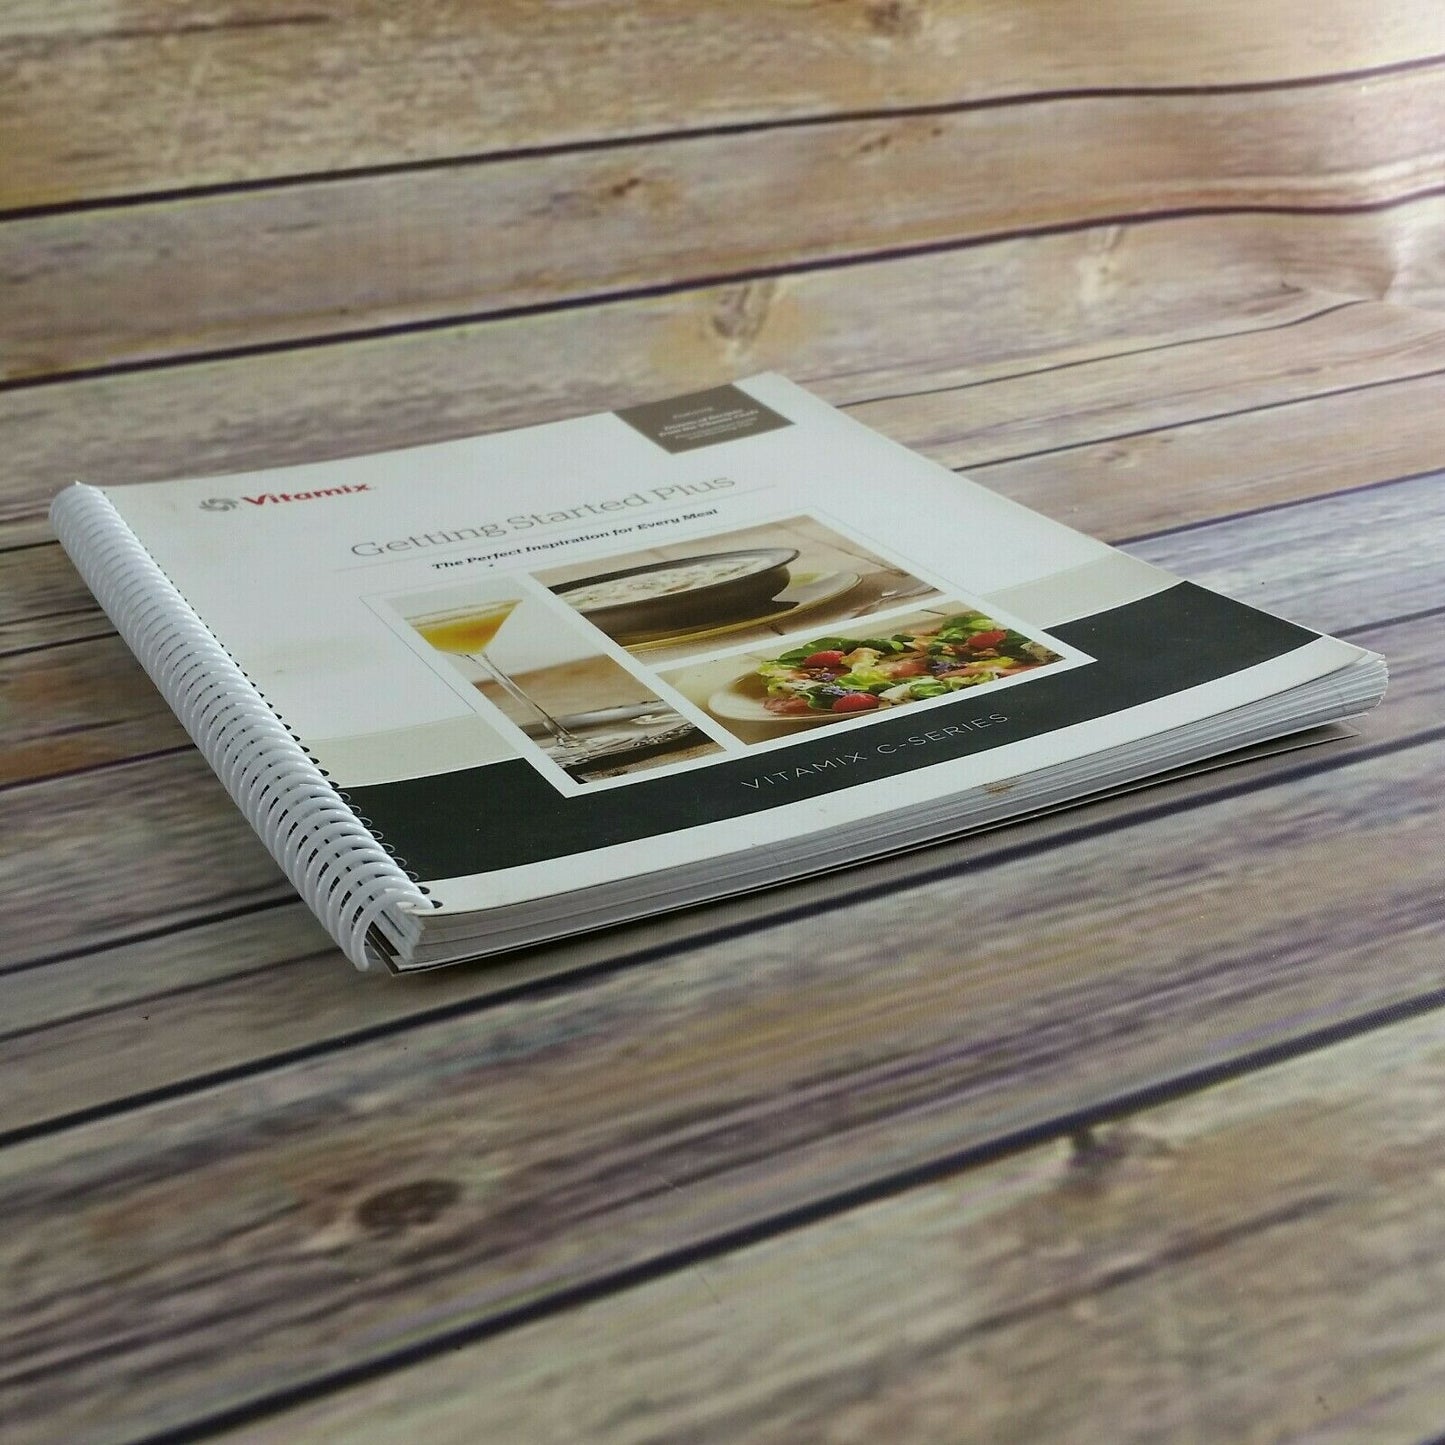 Vitamix Getting Started Plus Cookbook Recipes C-Series Plus Blending Tips 2014